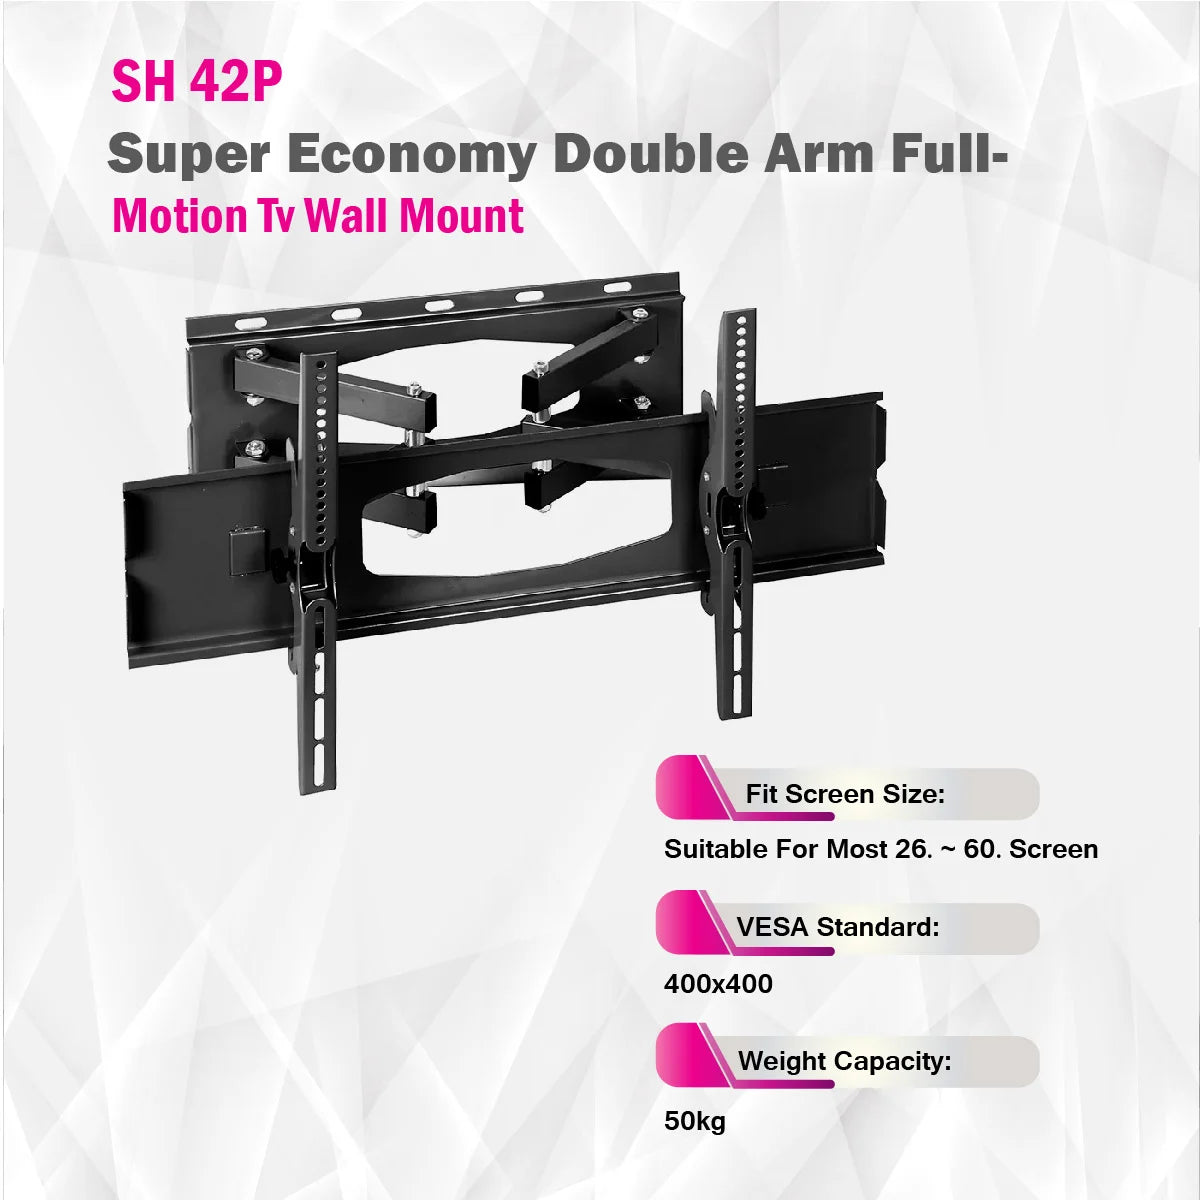 SkillTech  - SH 42P - Super Economy Double Arm Full-Motion Tv Wall Mount